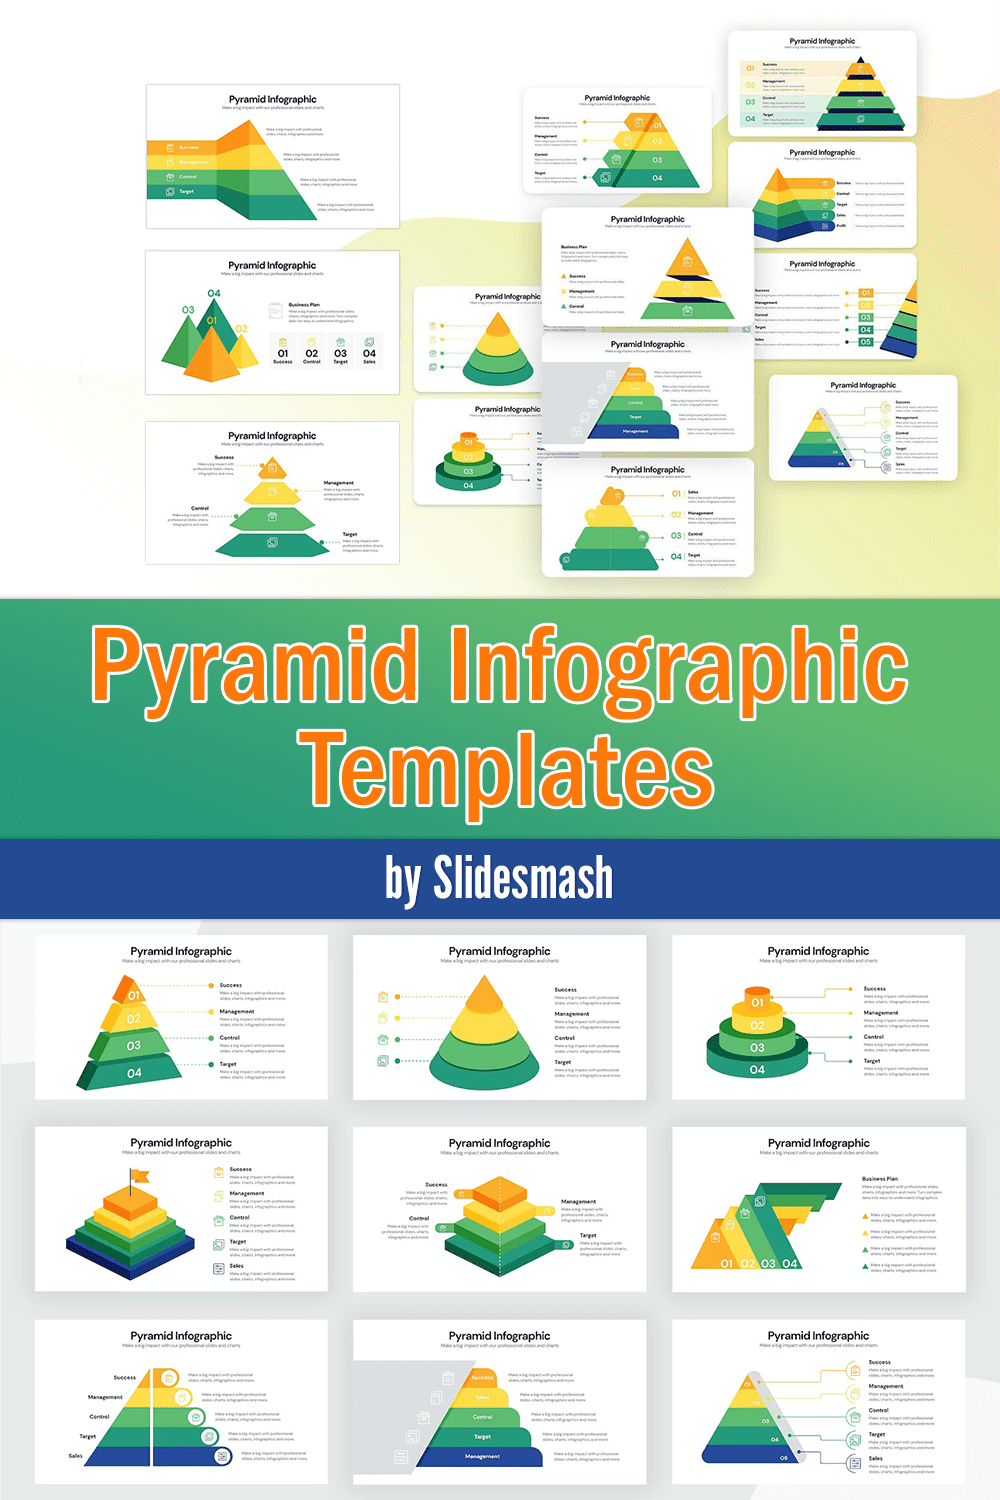 pyramid infographic templates pinterest 401